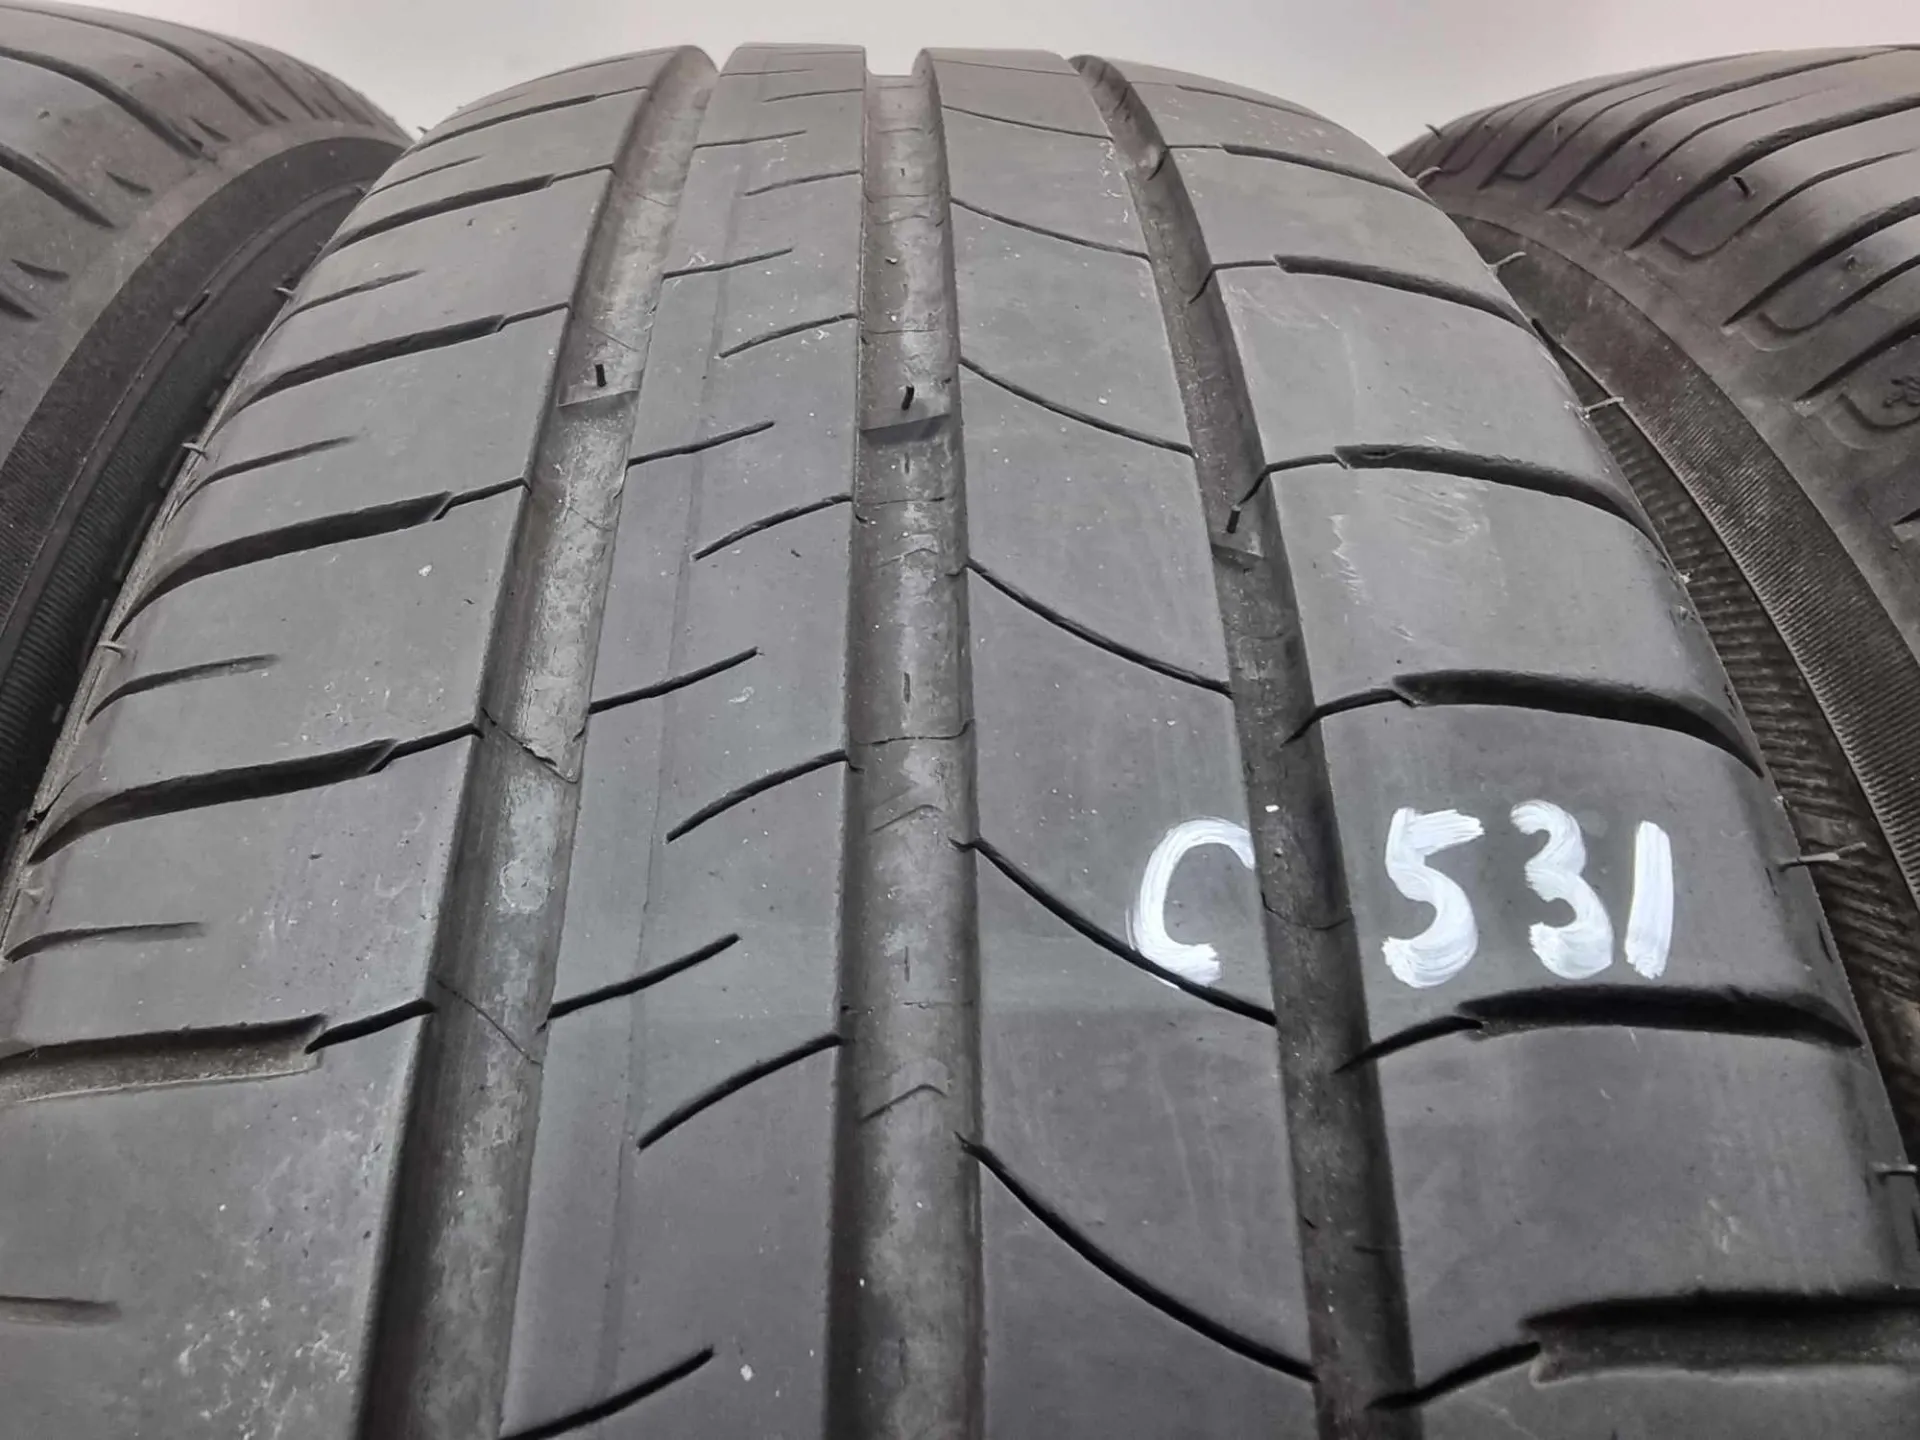 4бр летни гуми 185/65/15 Michelin C531 3